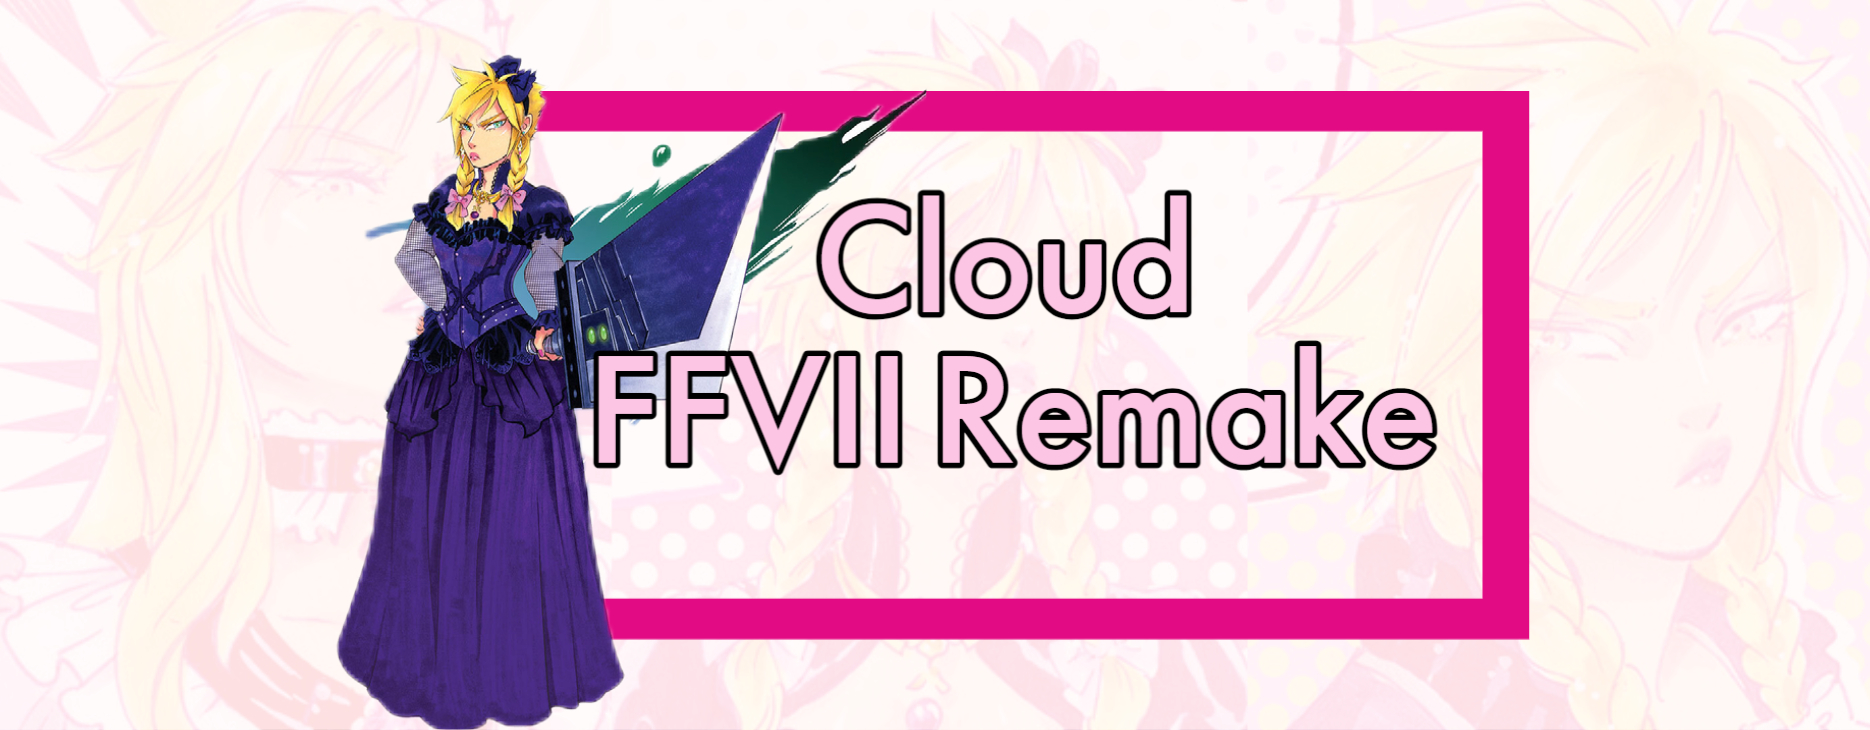 FFVII R Cloud